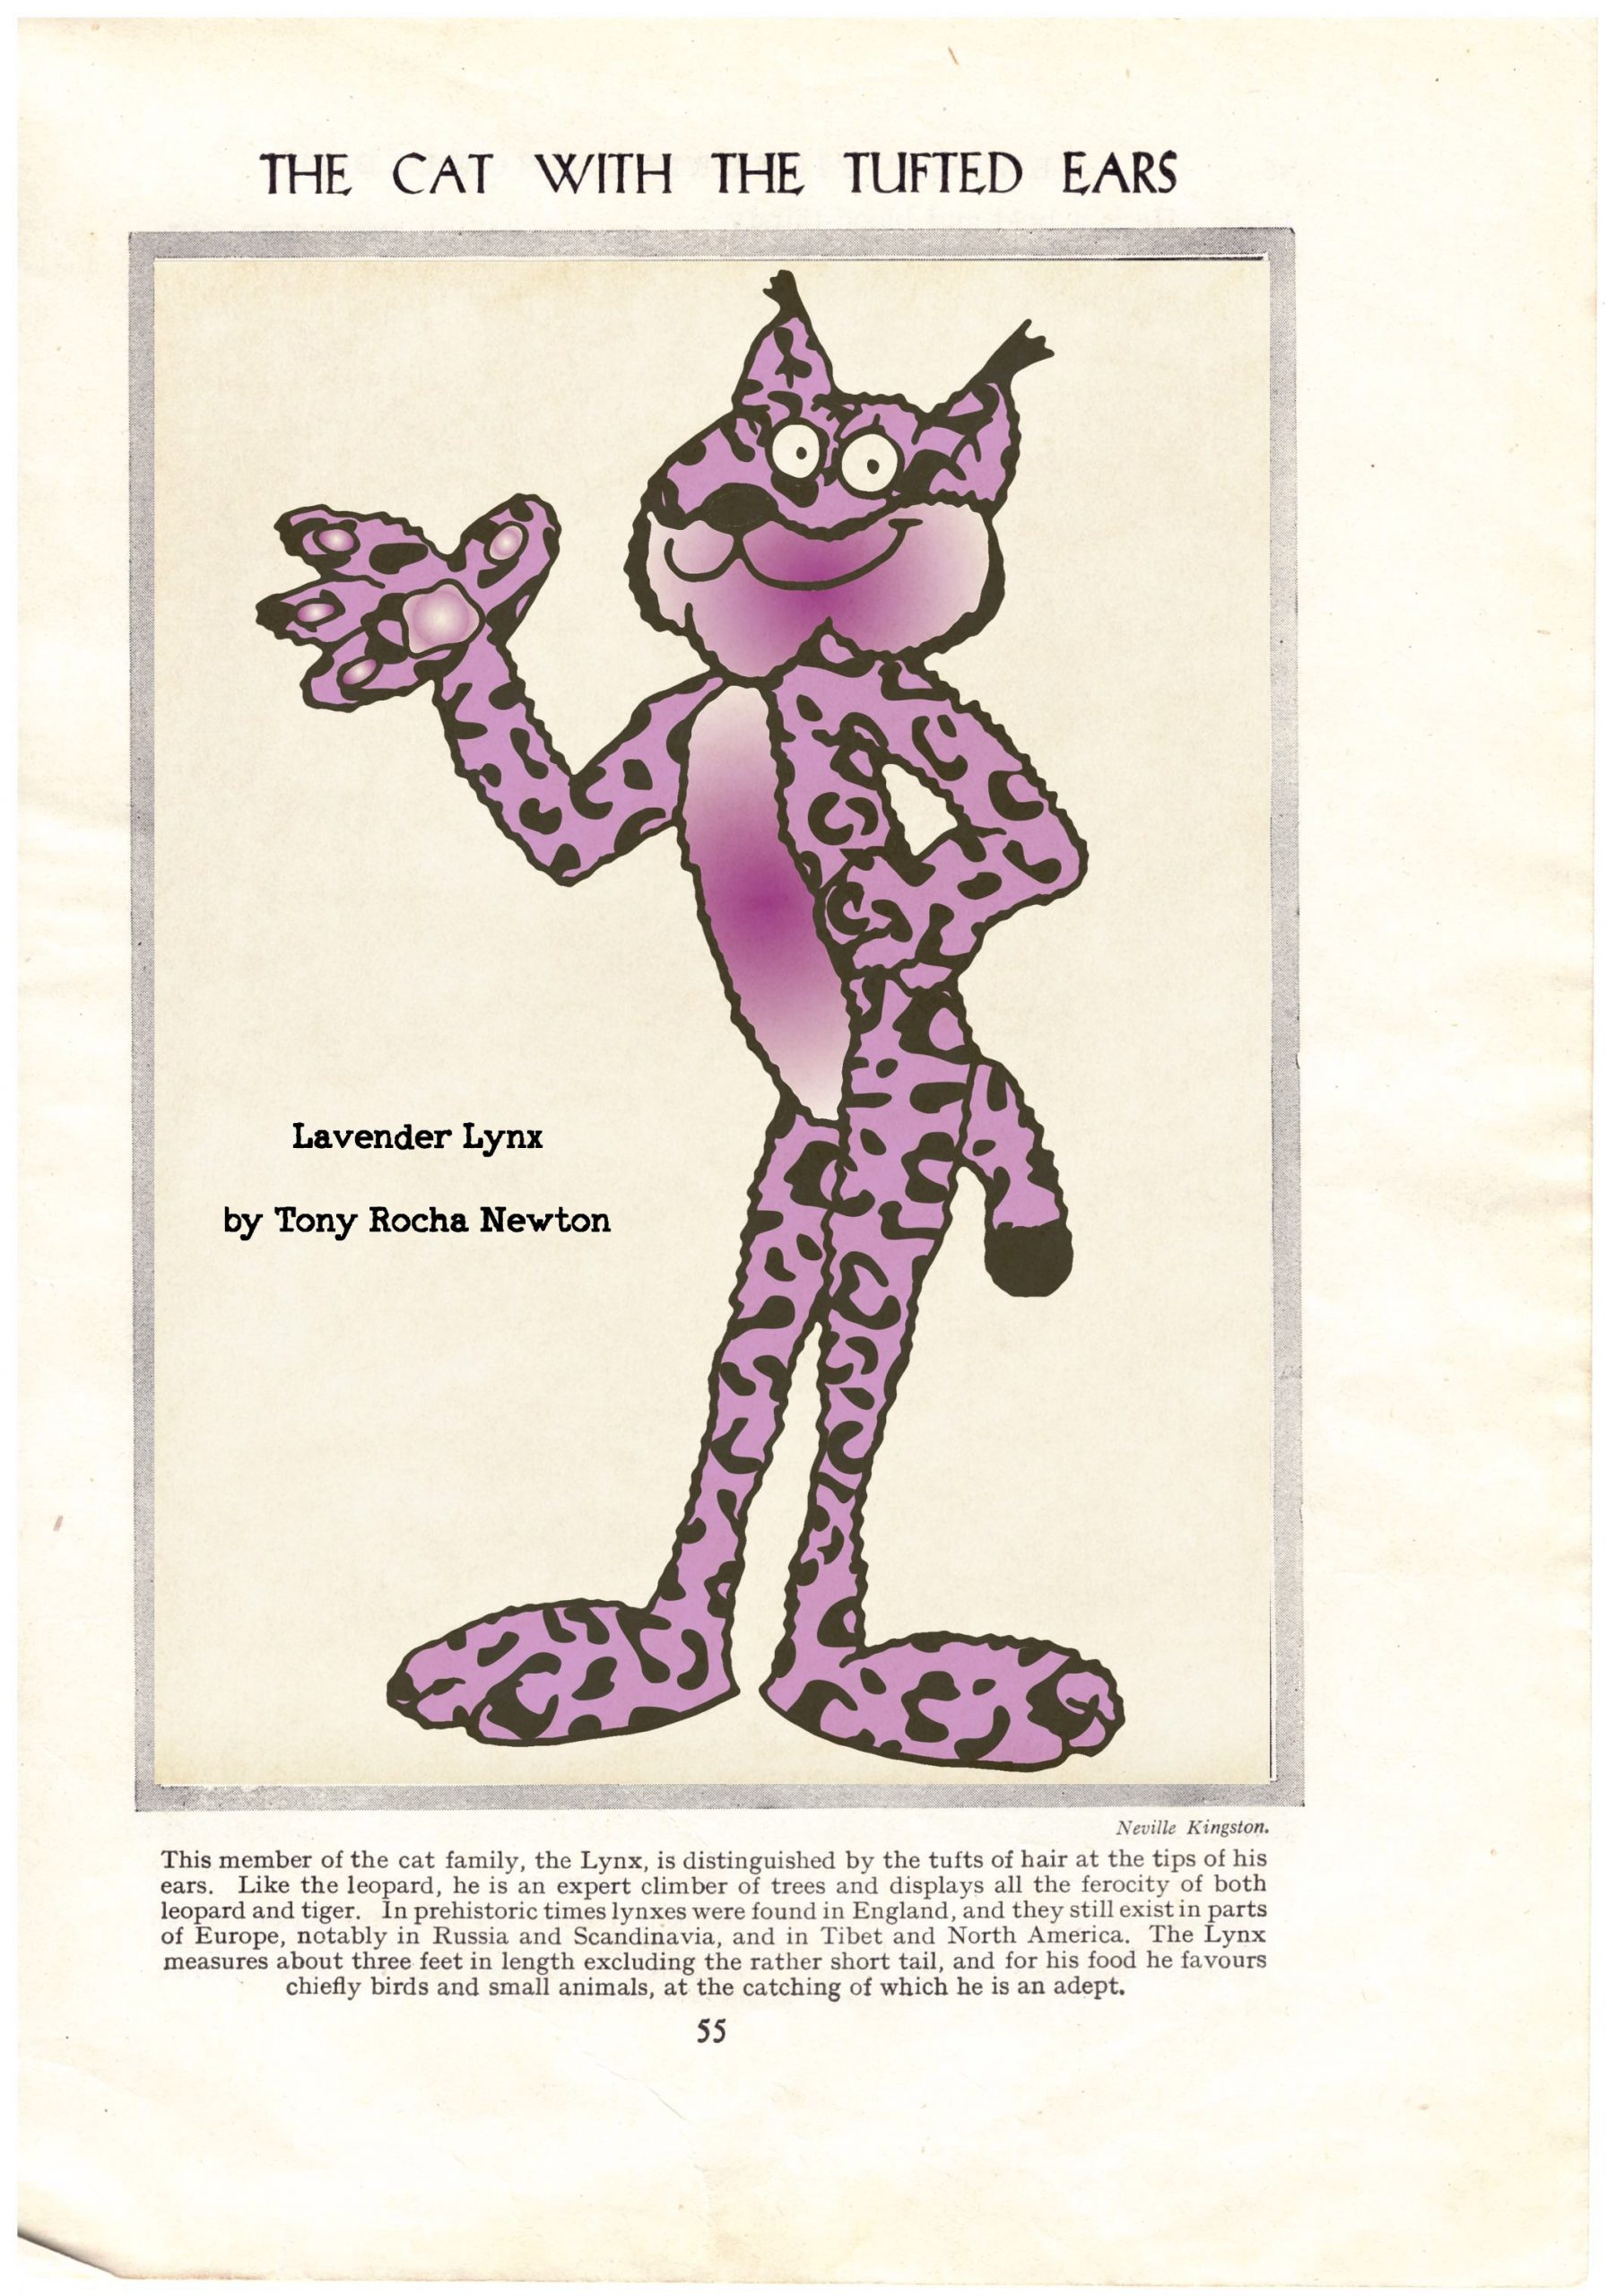 (177) Tony Rocha Newton - Lavender Lynx - The Cat with the Tufted Ears Image